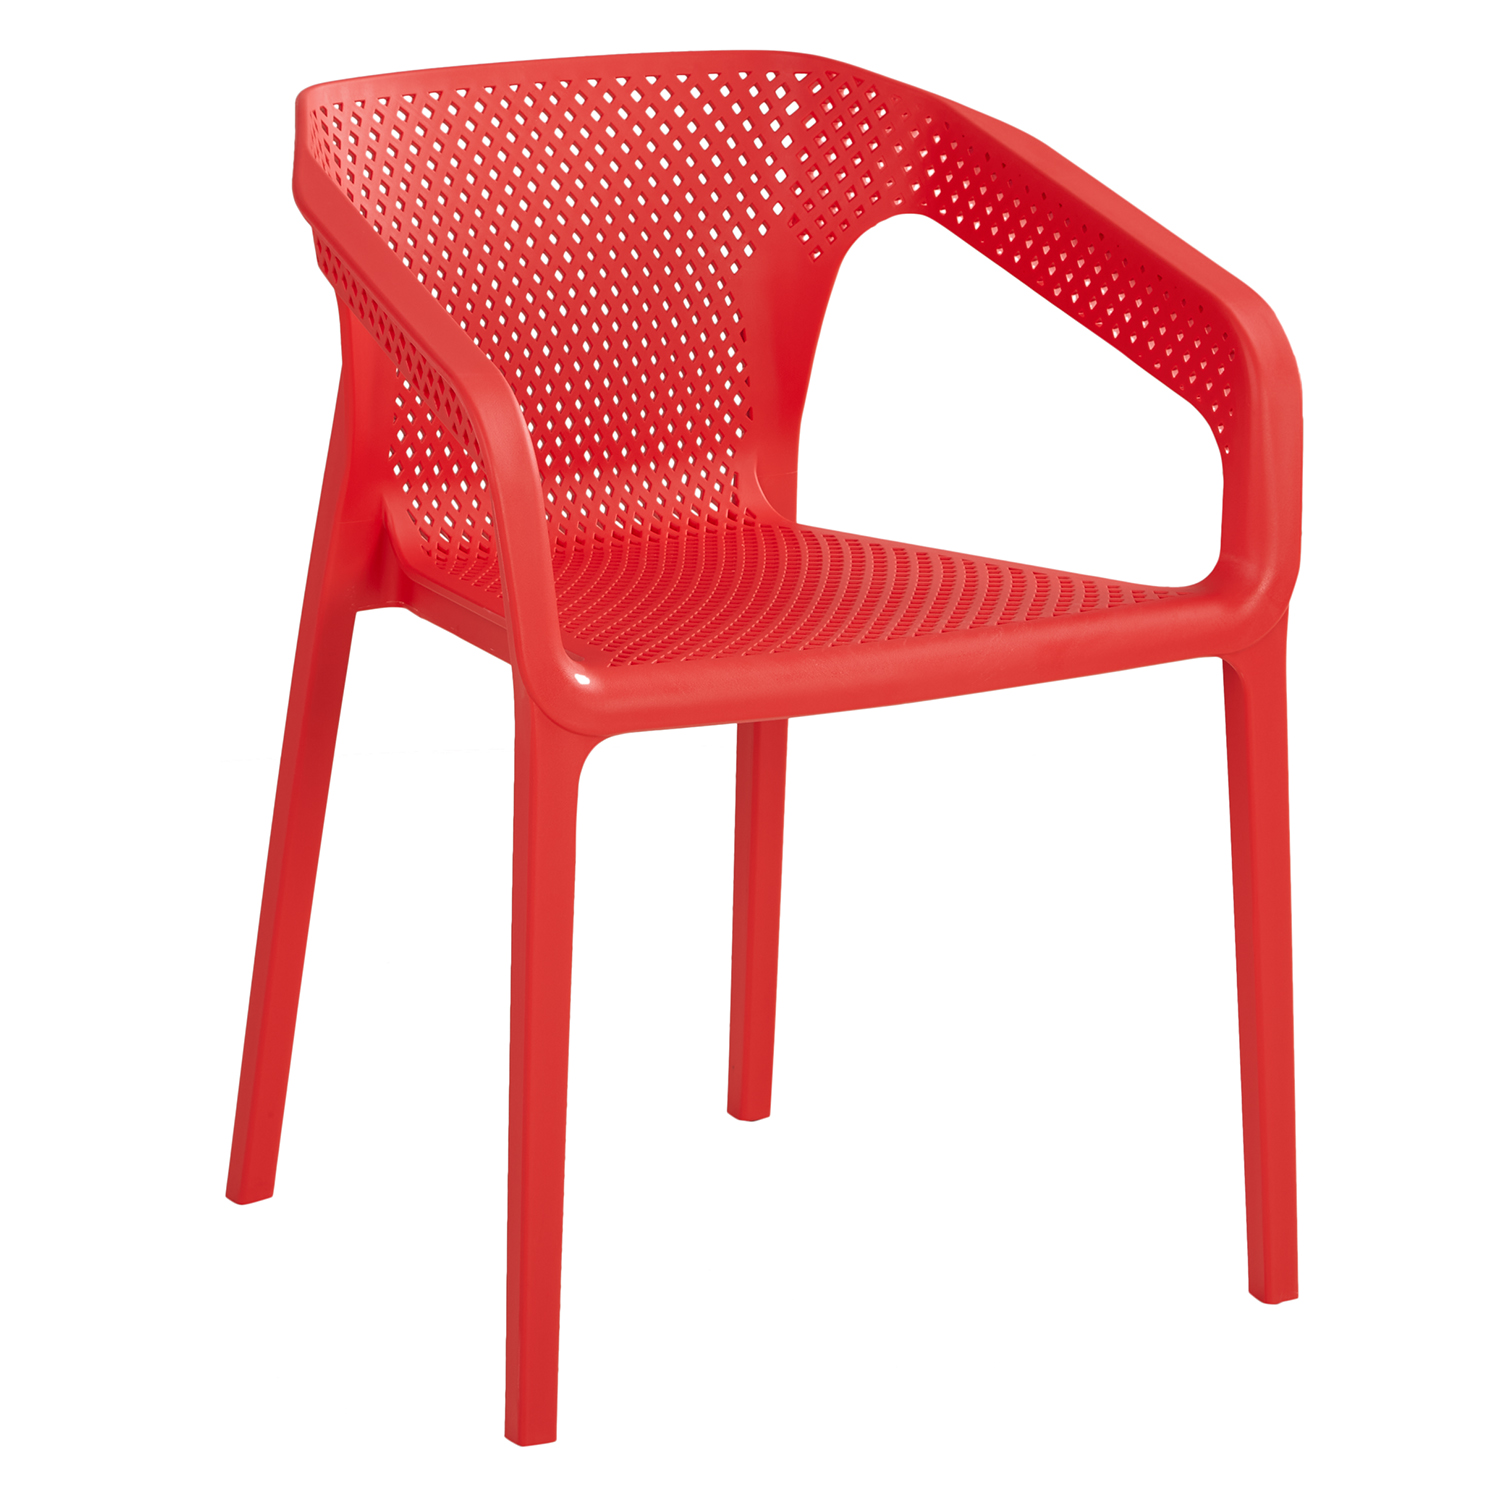 Gartenstuhl mit Armlehnen 4er Set Gartensessel Rot Stühle Kunststoff Stapelstühle Balkonstuhl Outdoor-Stuhl